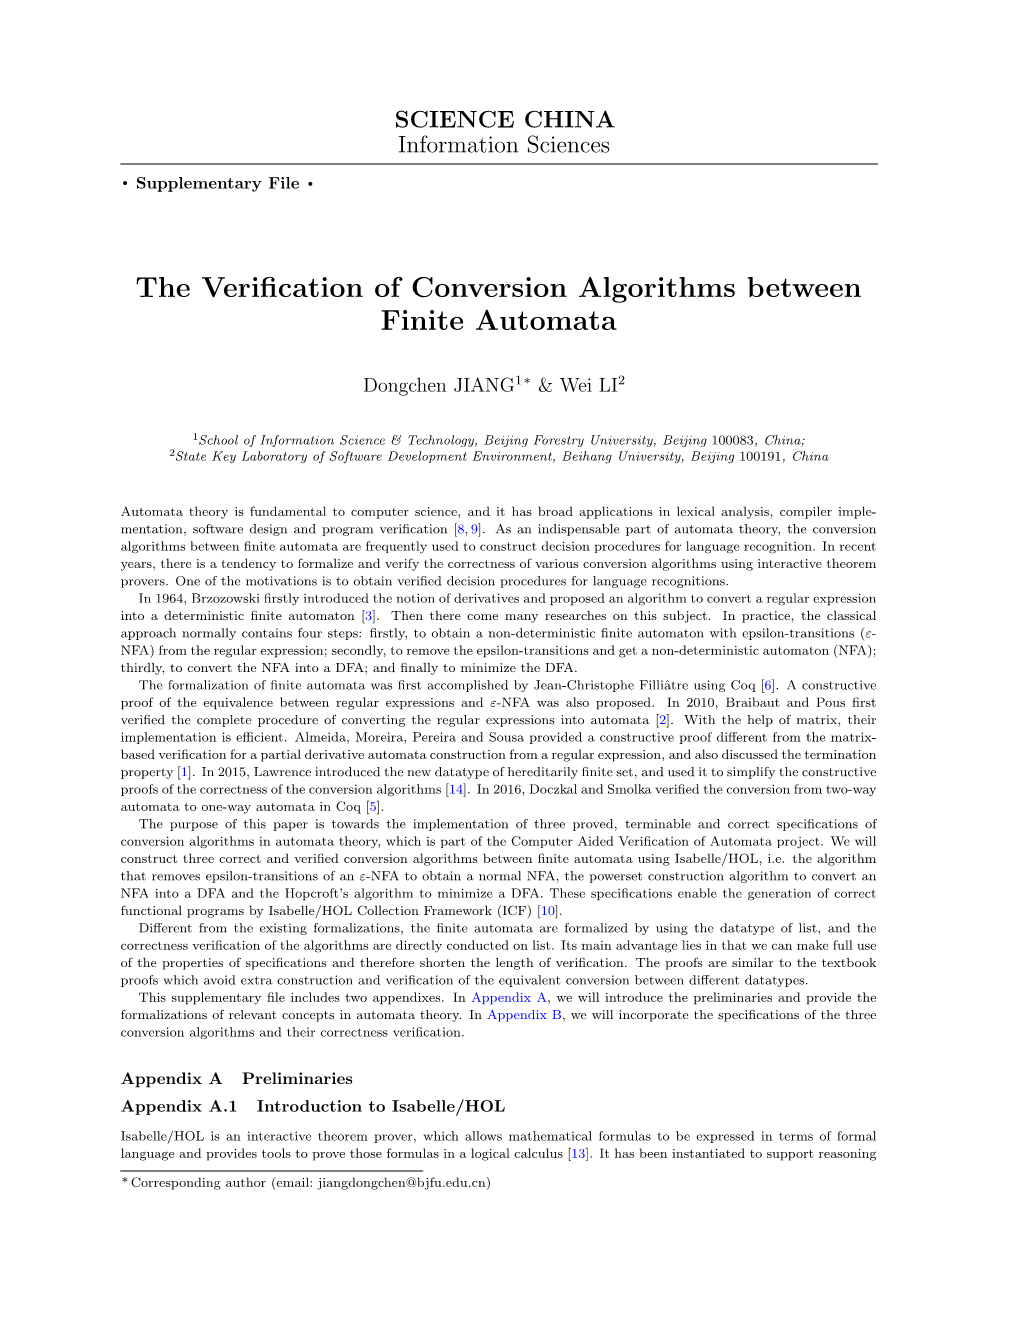 The Verification of Conversion Algorithms Between Finite Automata